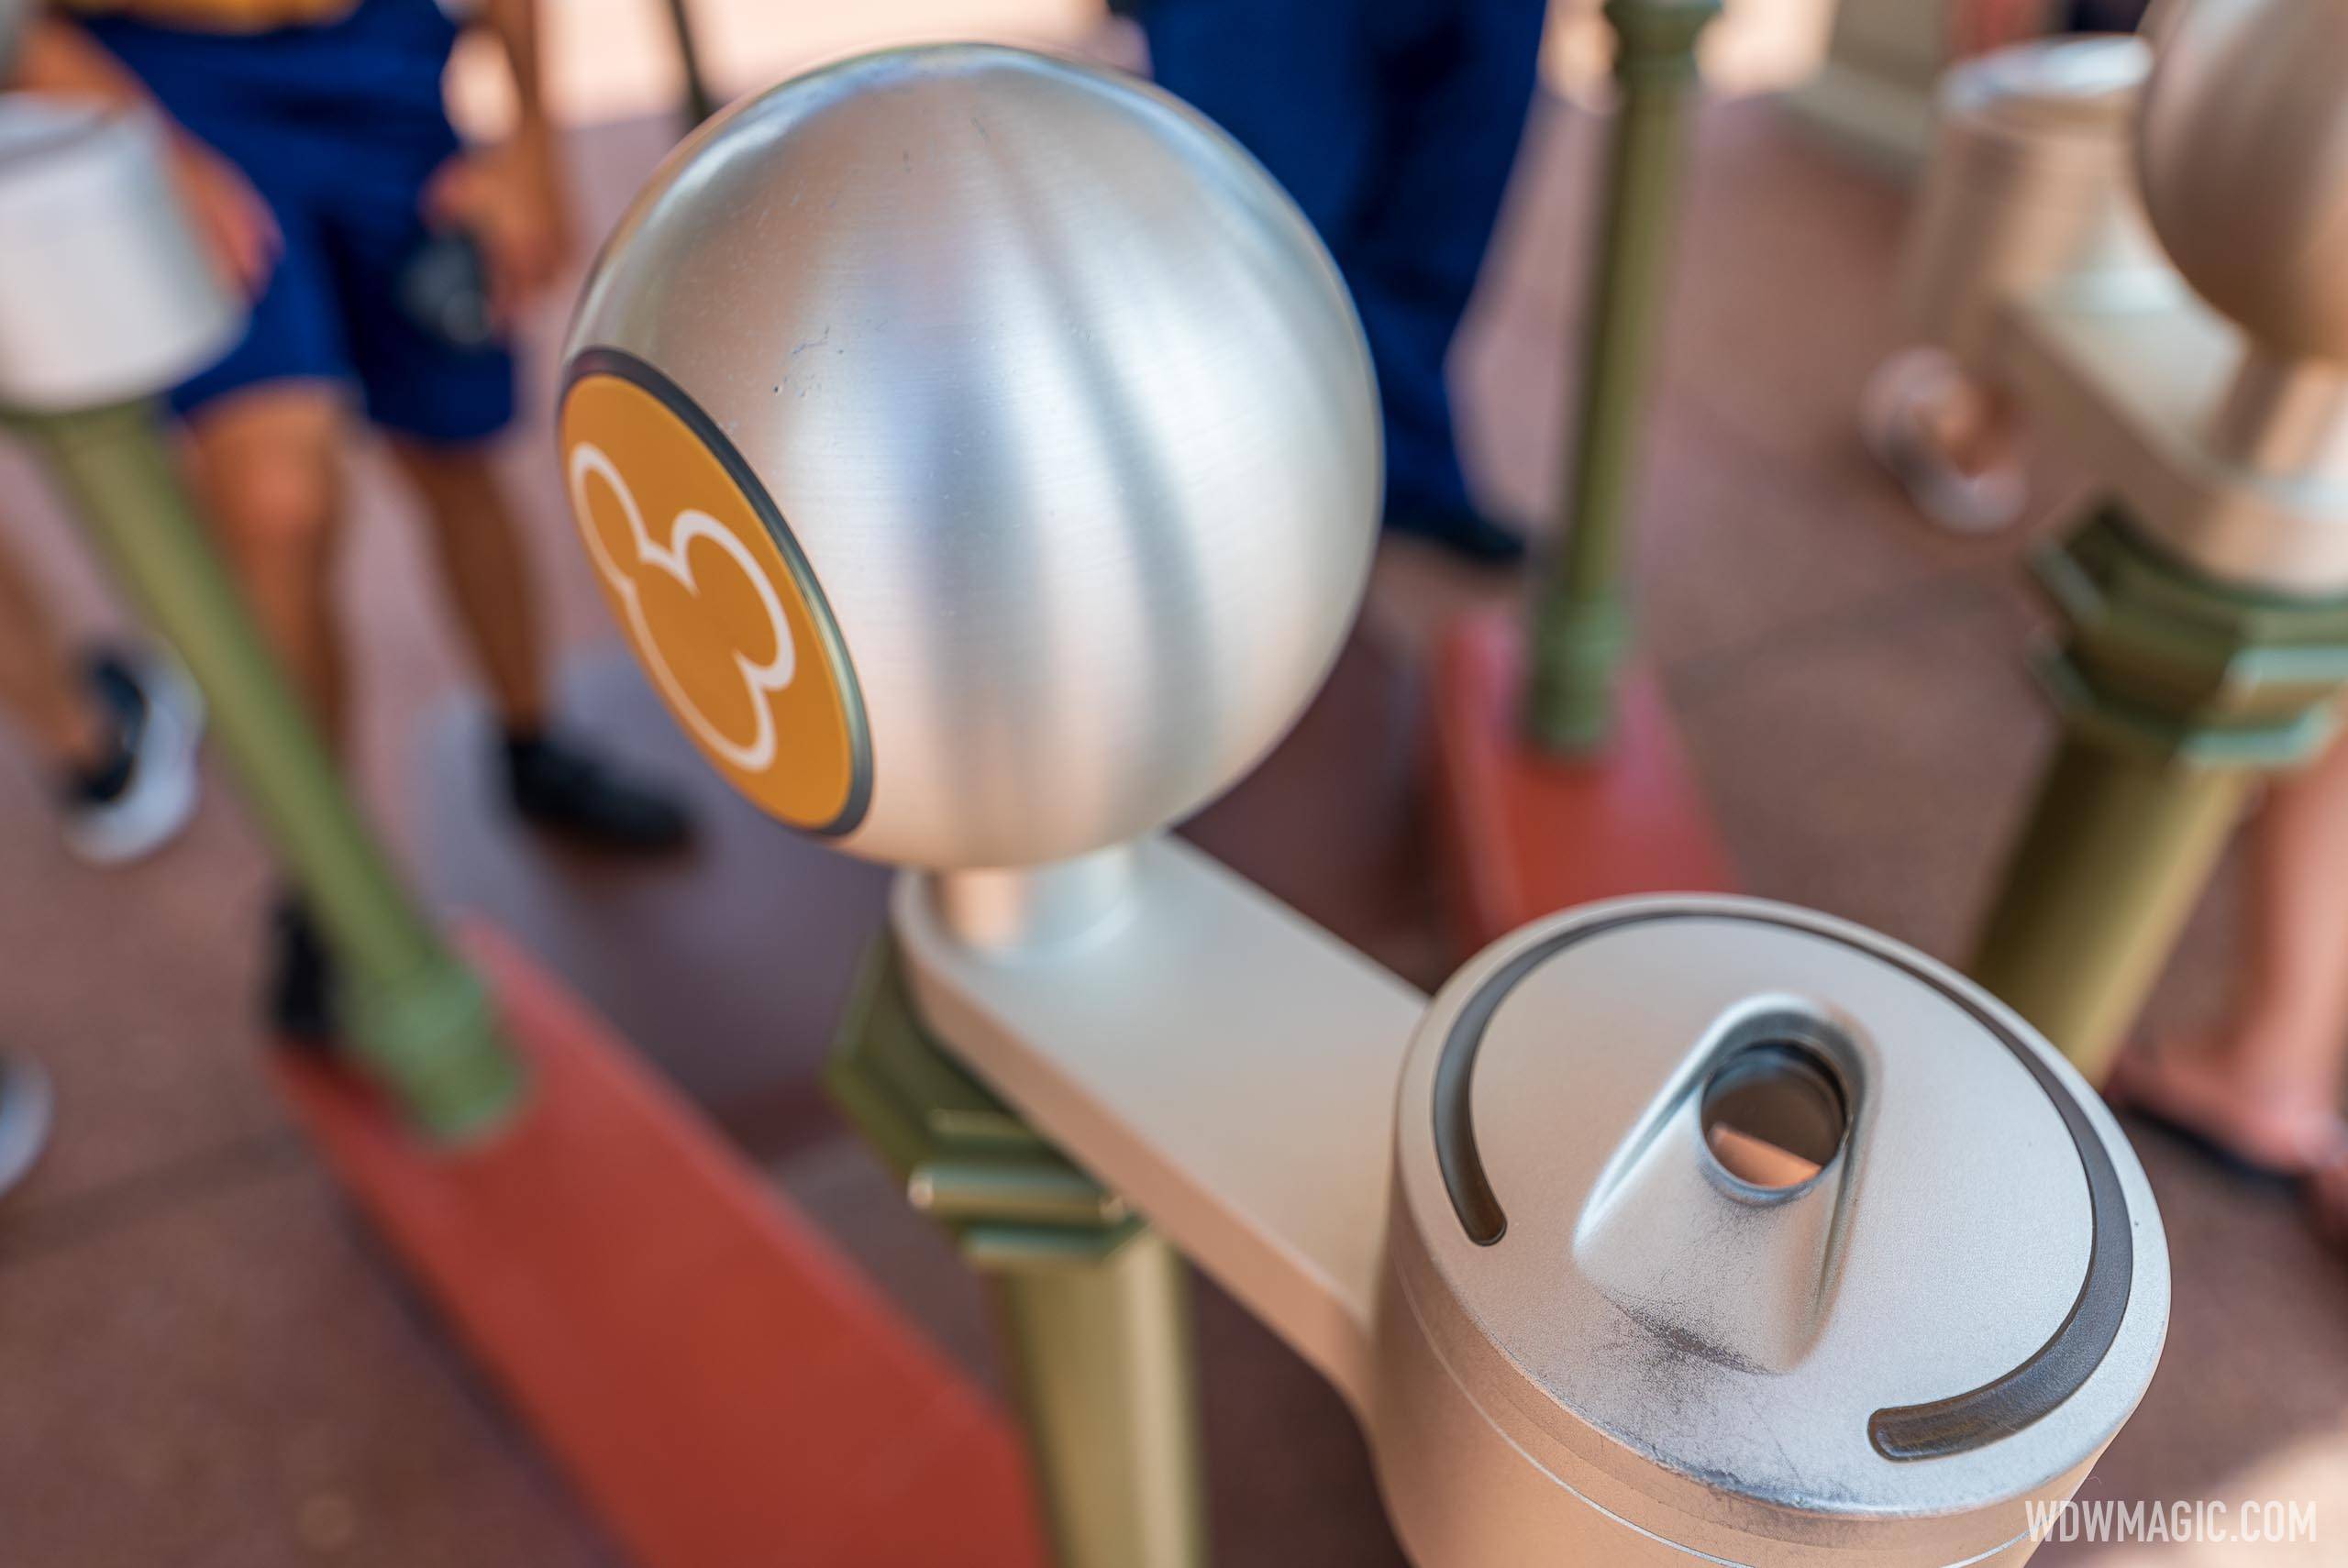 Fingerprint scanners return to the Walt Disney World theme park main entrances